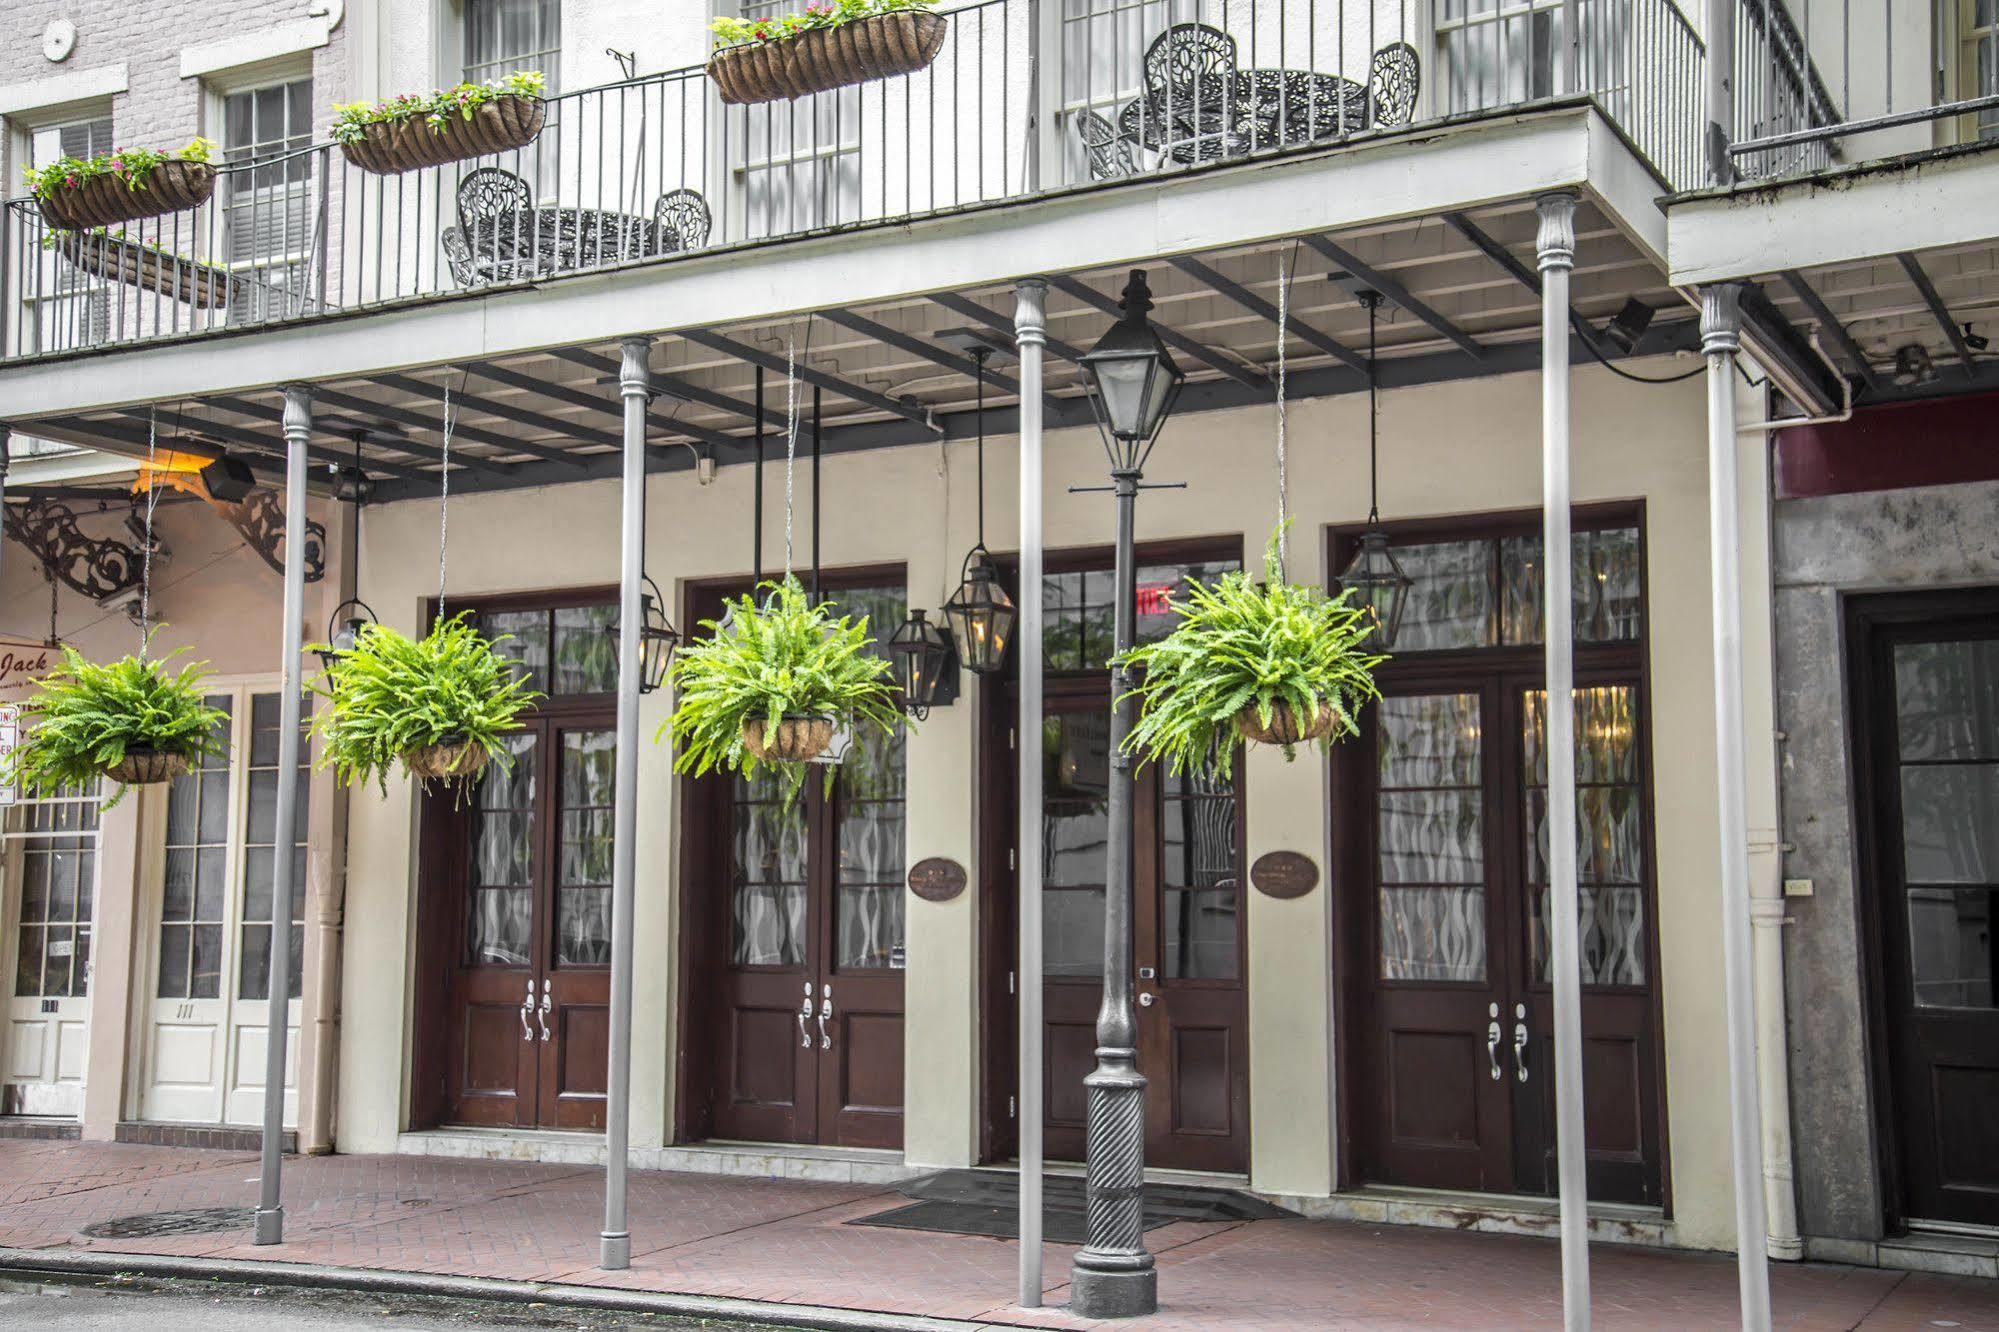 Bluegreen Vacations Club La Pension New Orleans Kültér fotó